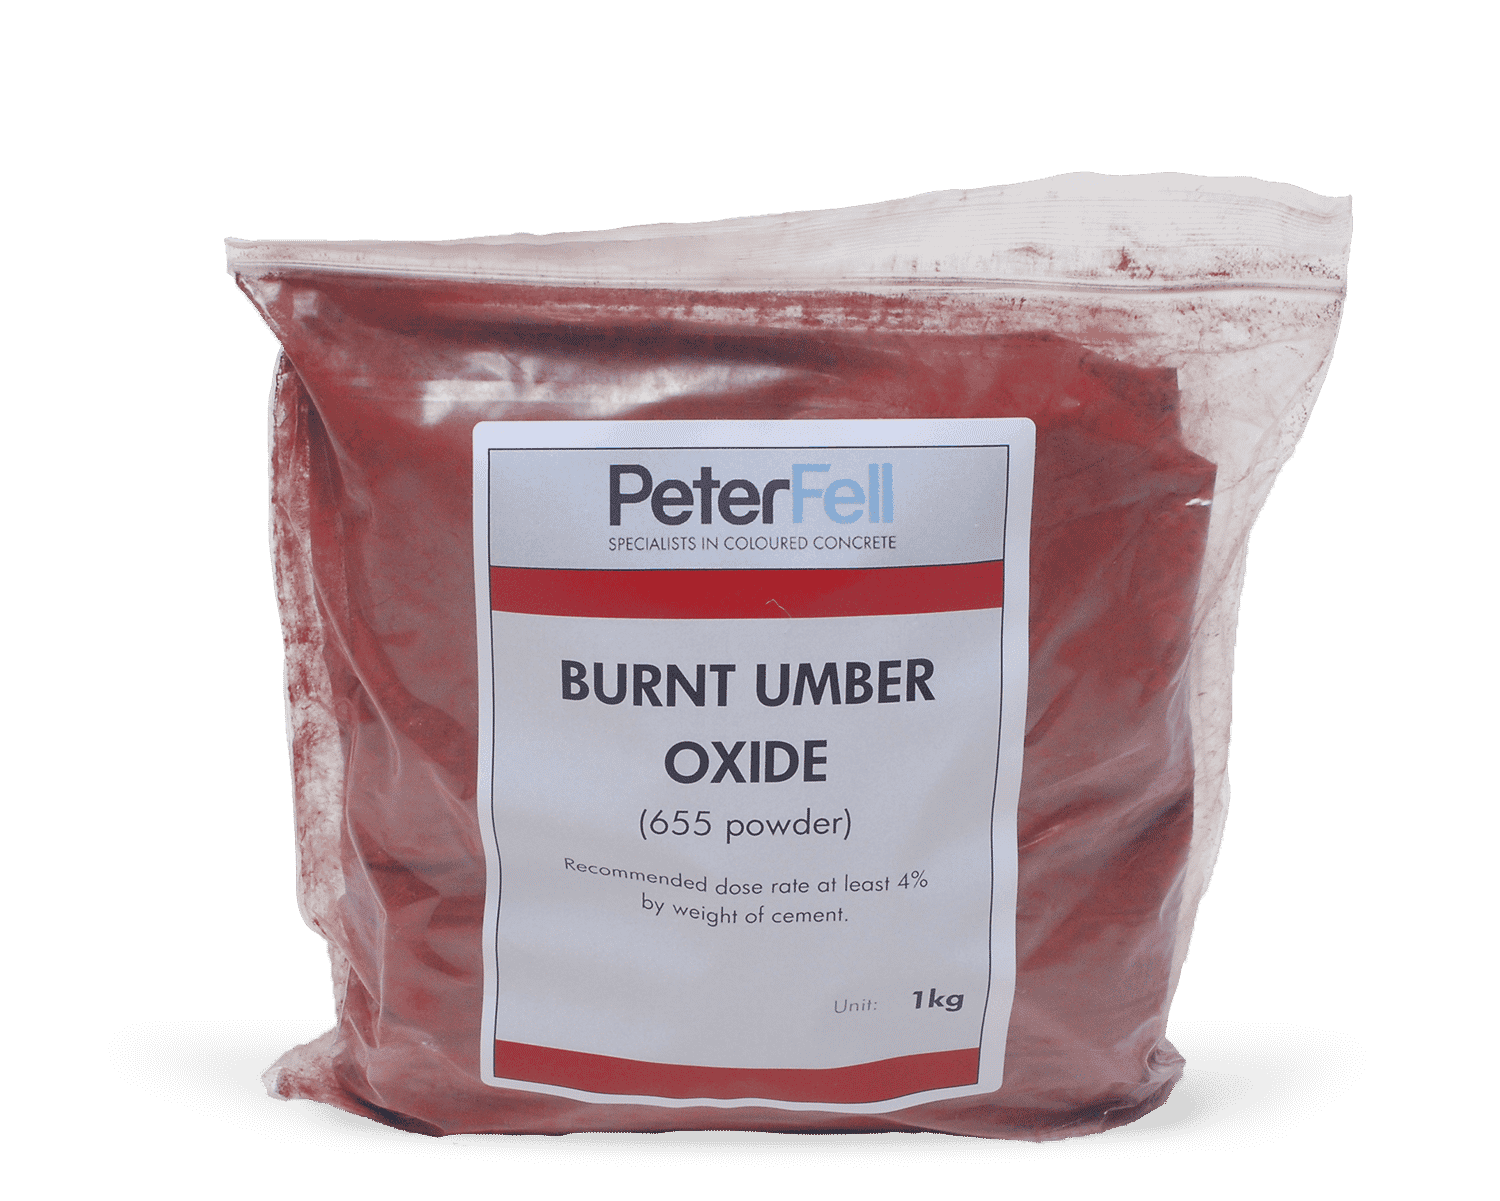 Burnt Umber Oxide for colouring concrete